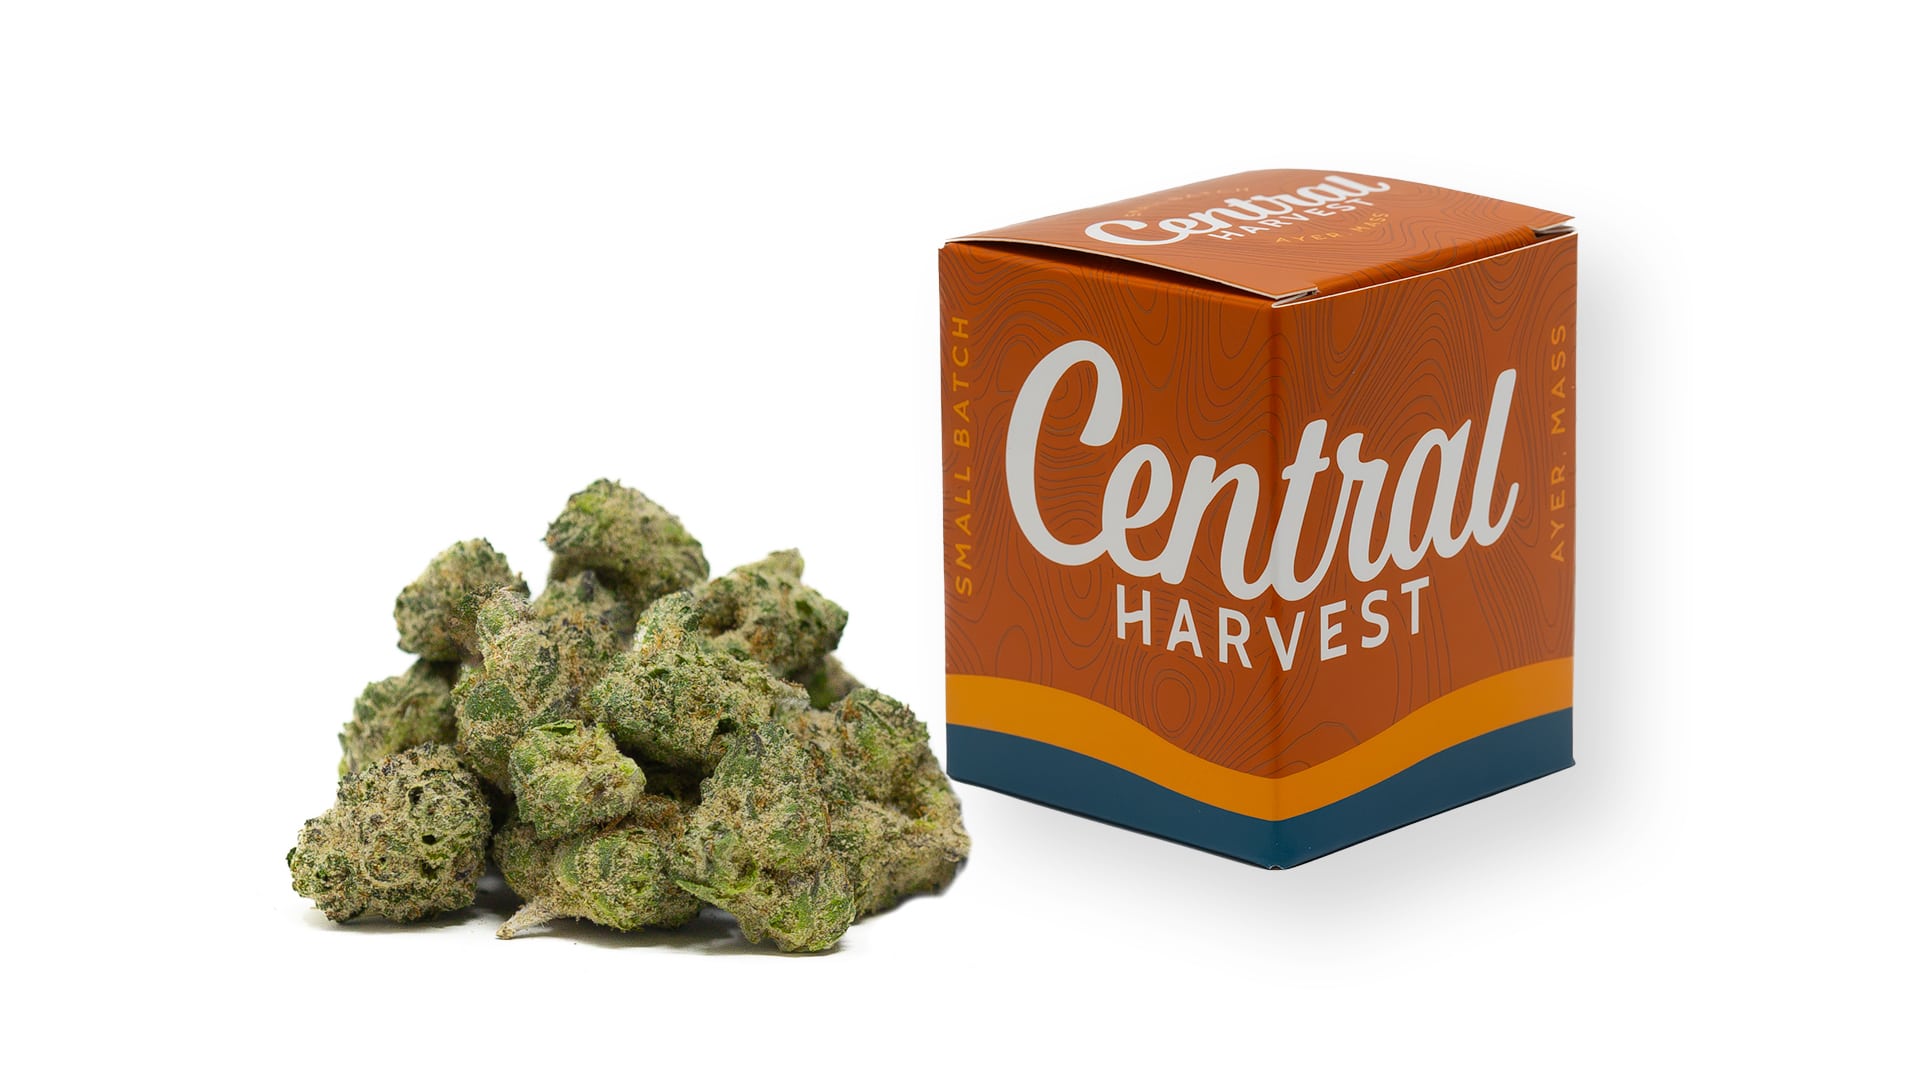 Buckin' Runtz an Indica Cannabis strain grown by Central Harvest